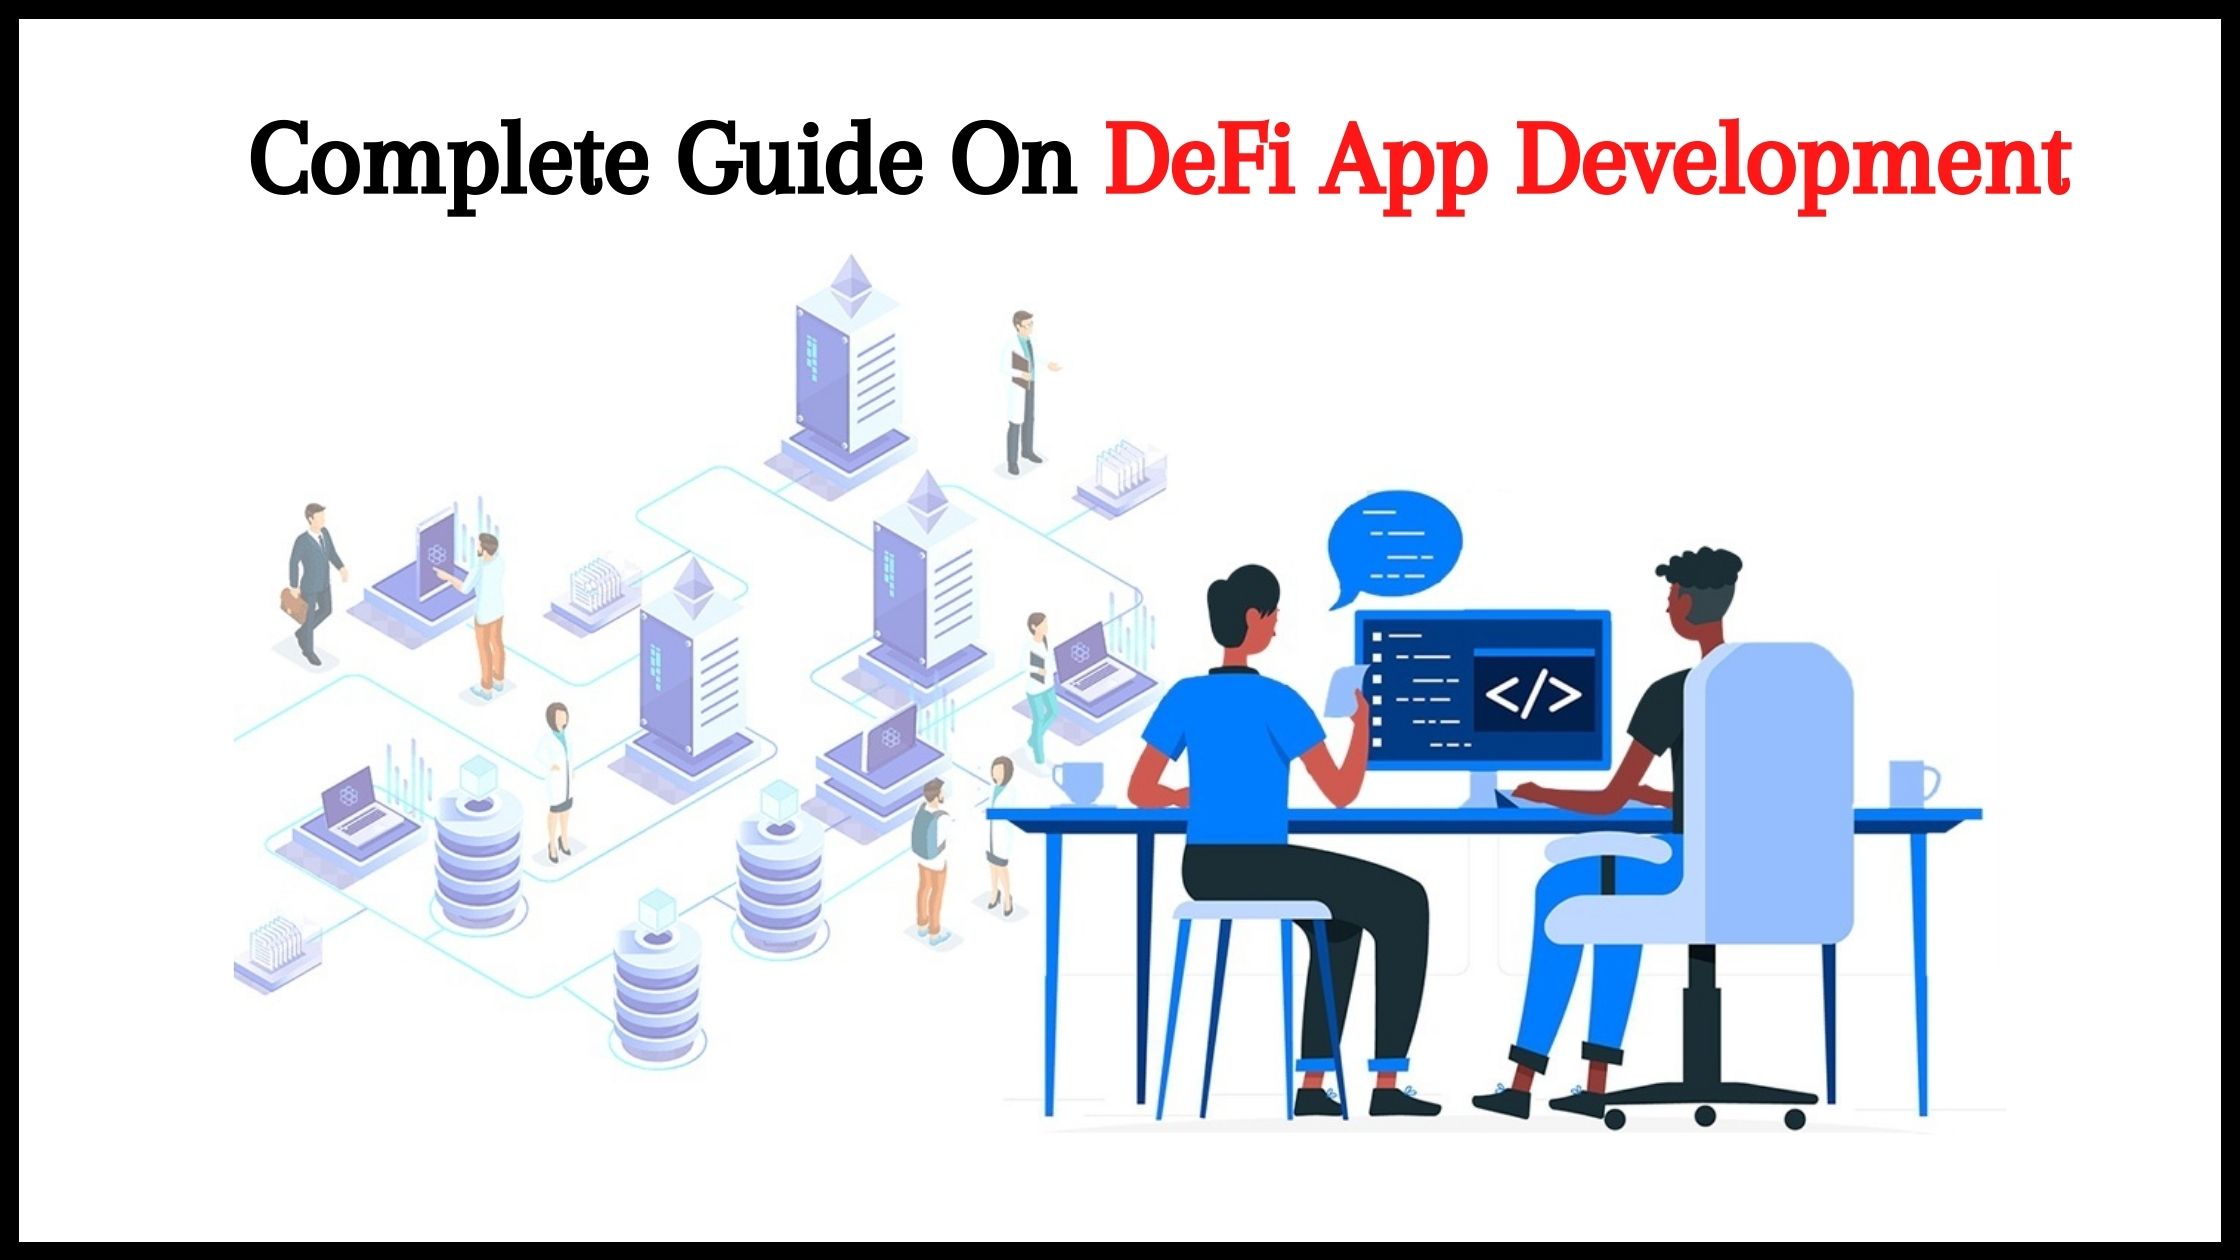 Complete Guide On DeFi App-Development